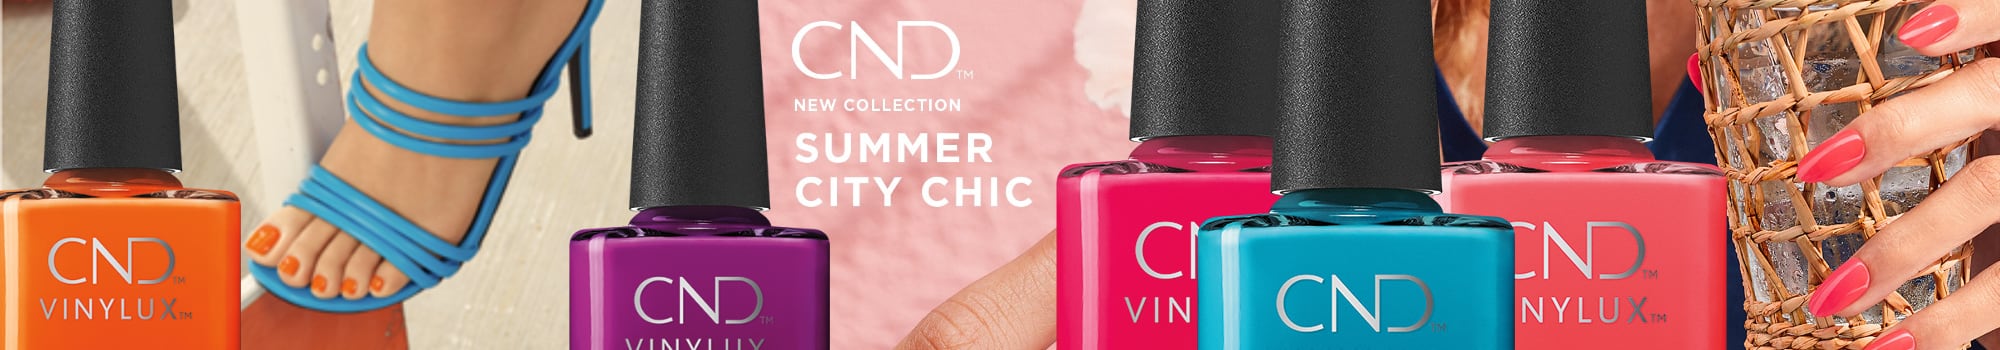 CND Vinylux Summer City Chic Nail polish